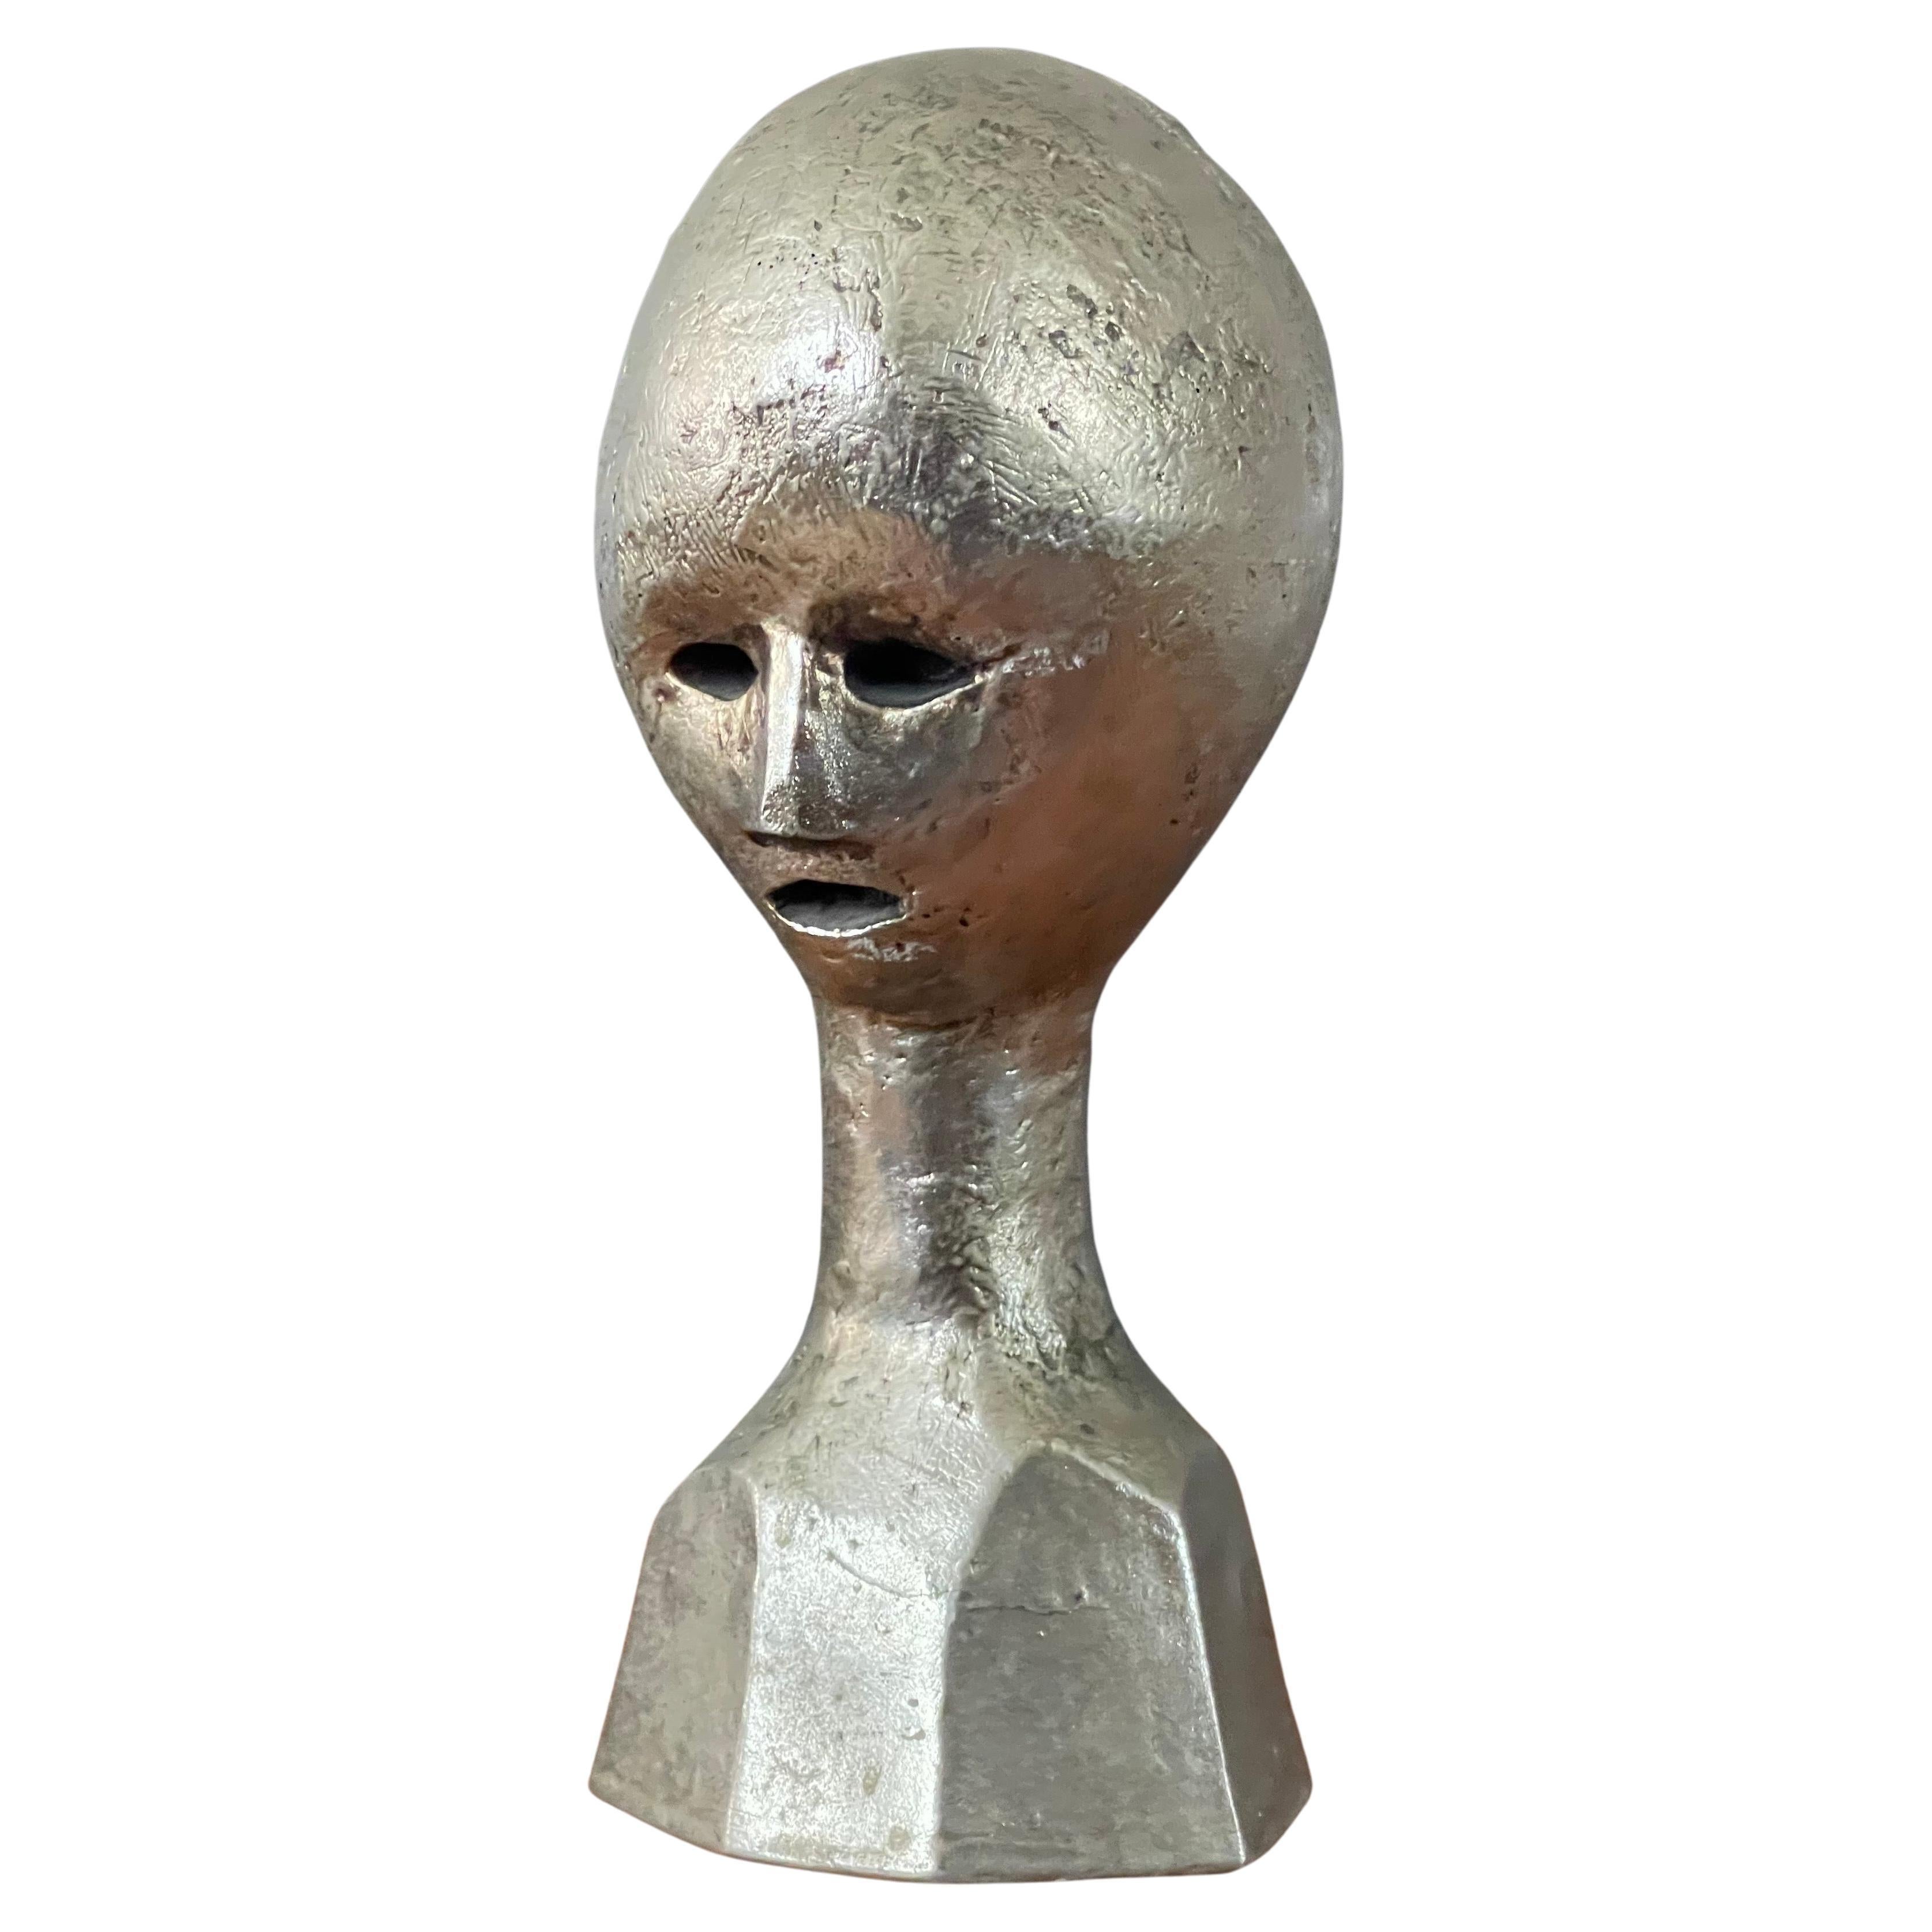 MCM Modernist Alien Bust / Head Sculpture by Andre Minaux